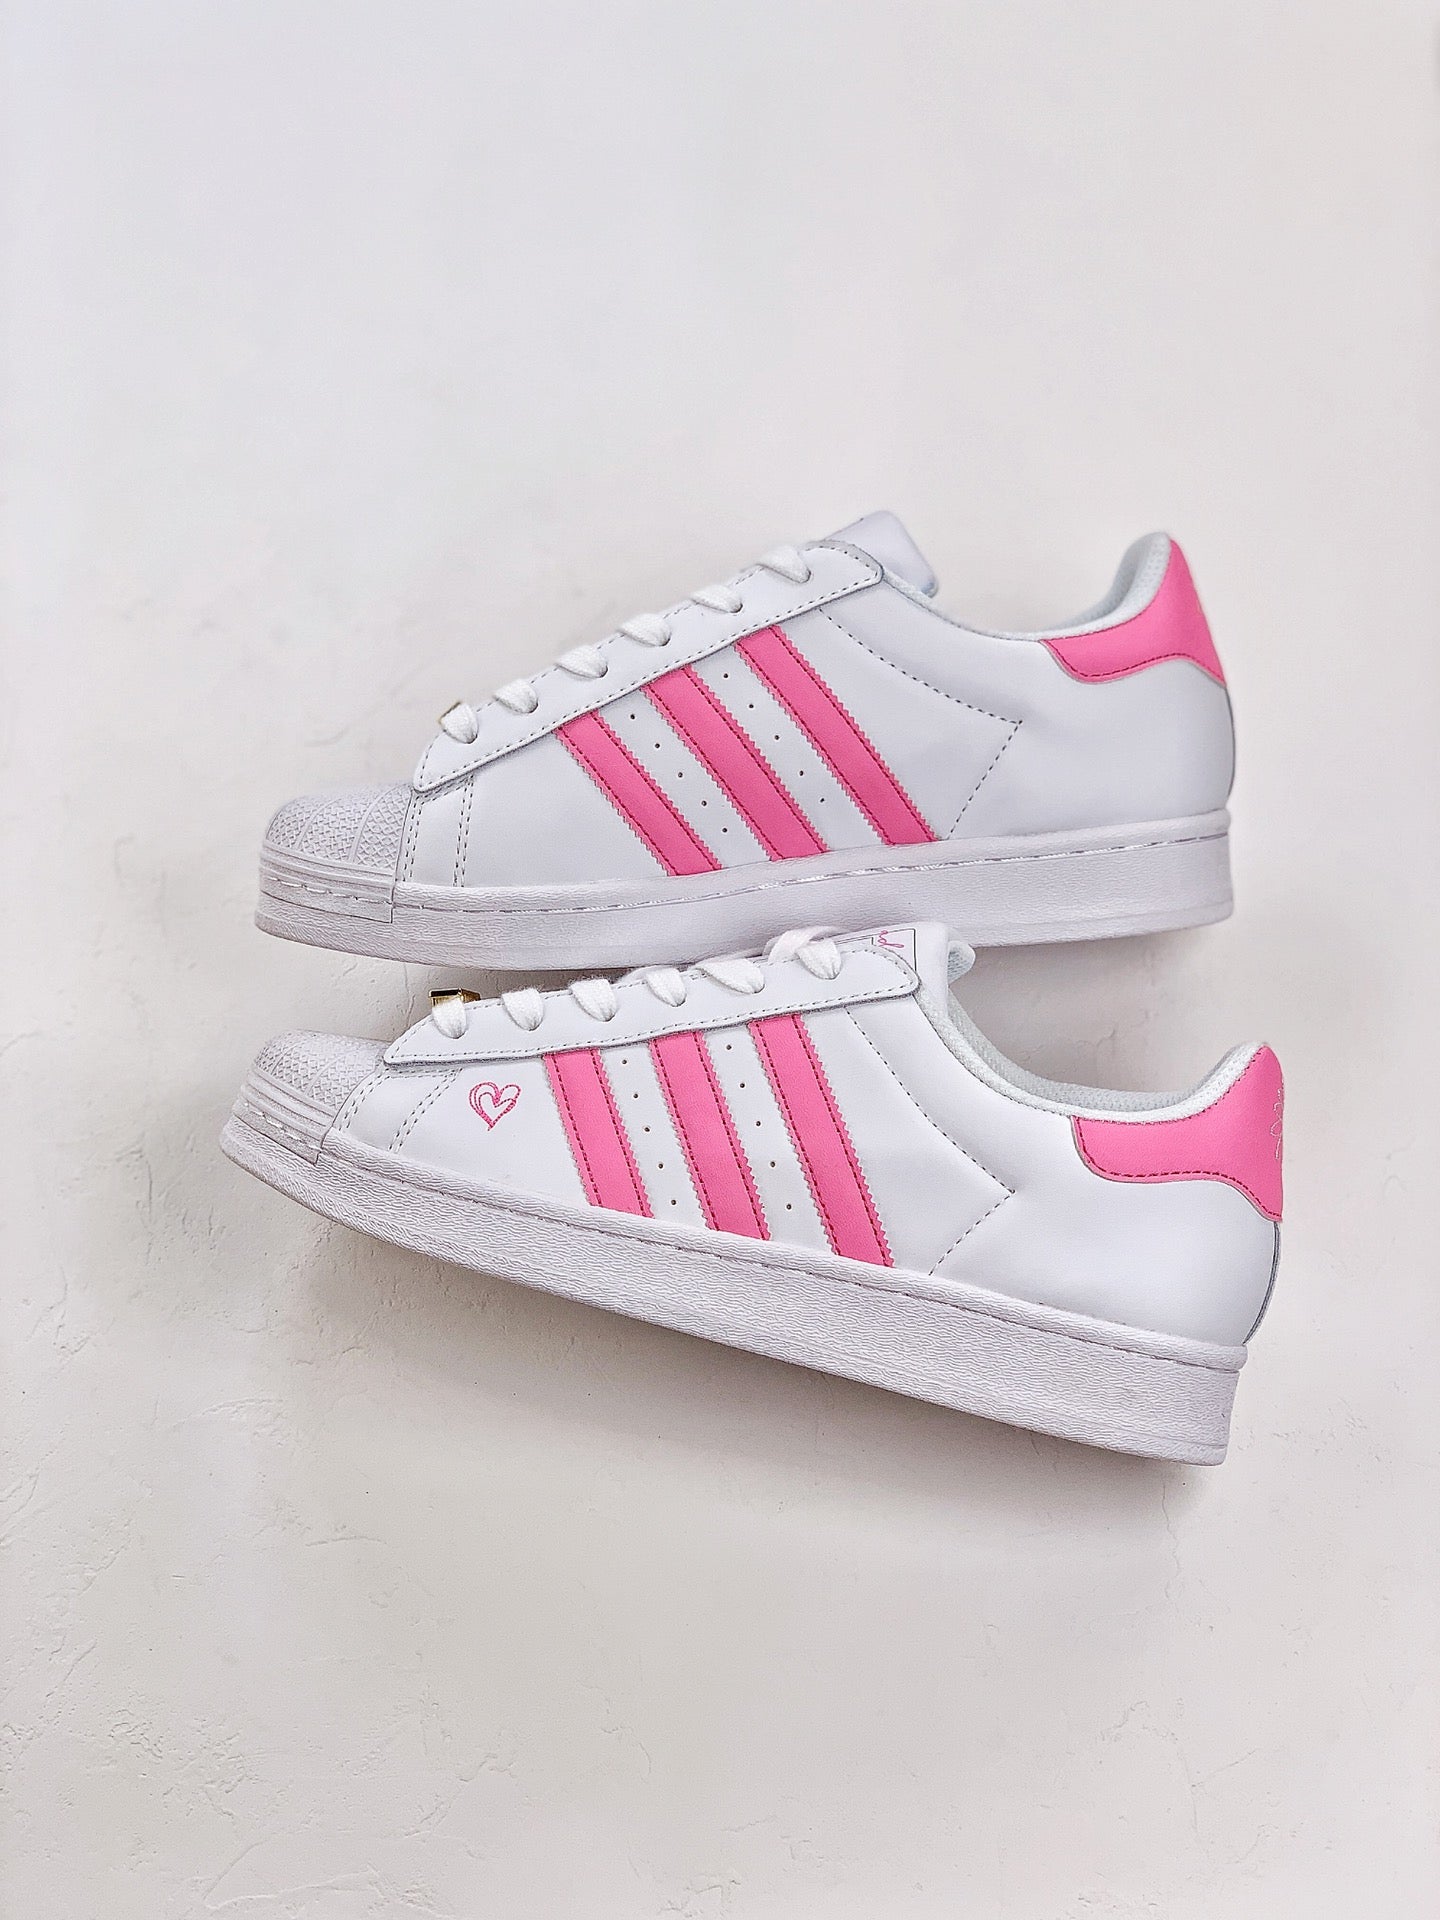 Adidas superstar white hot pink